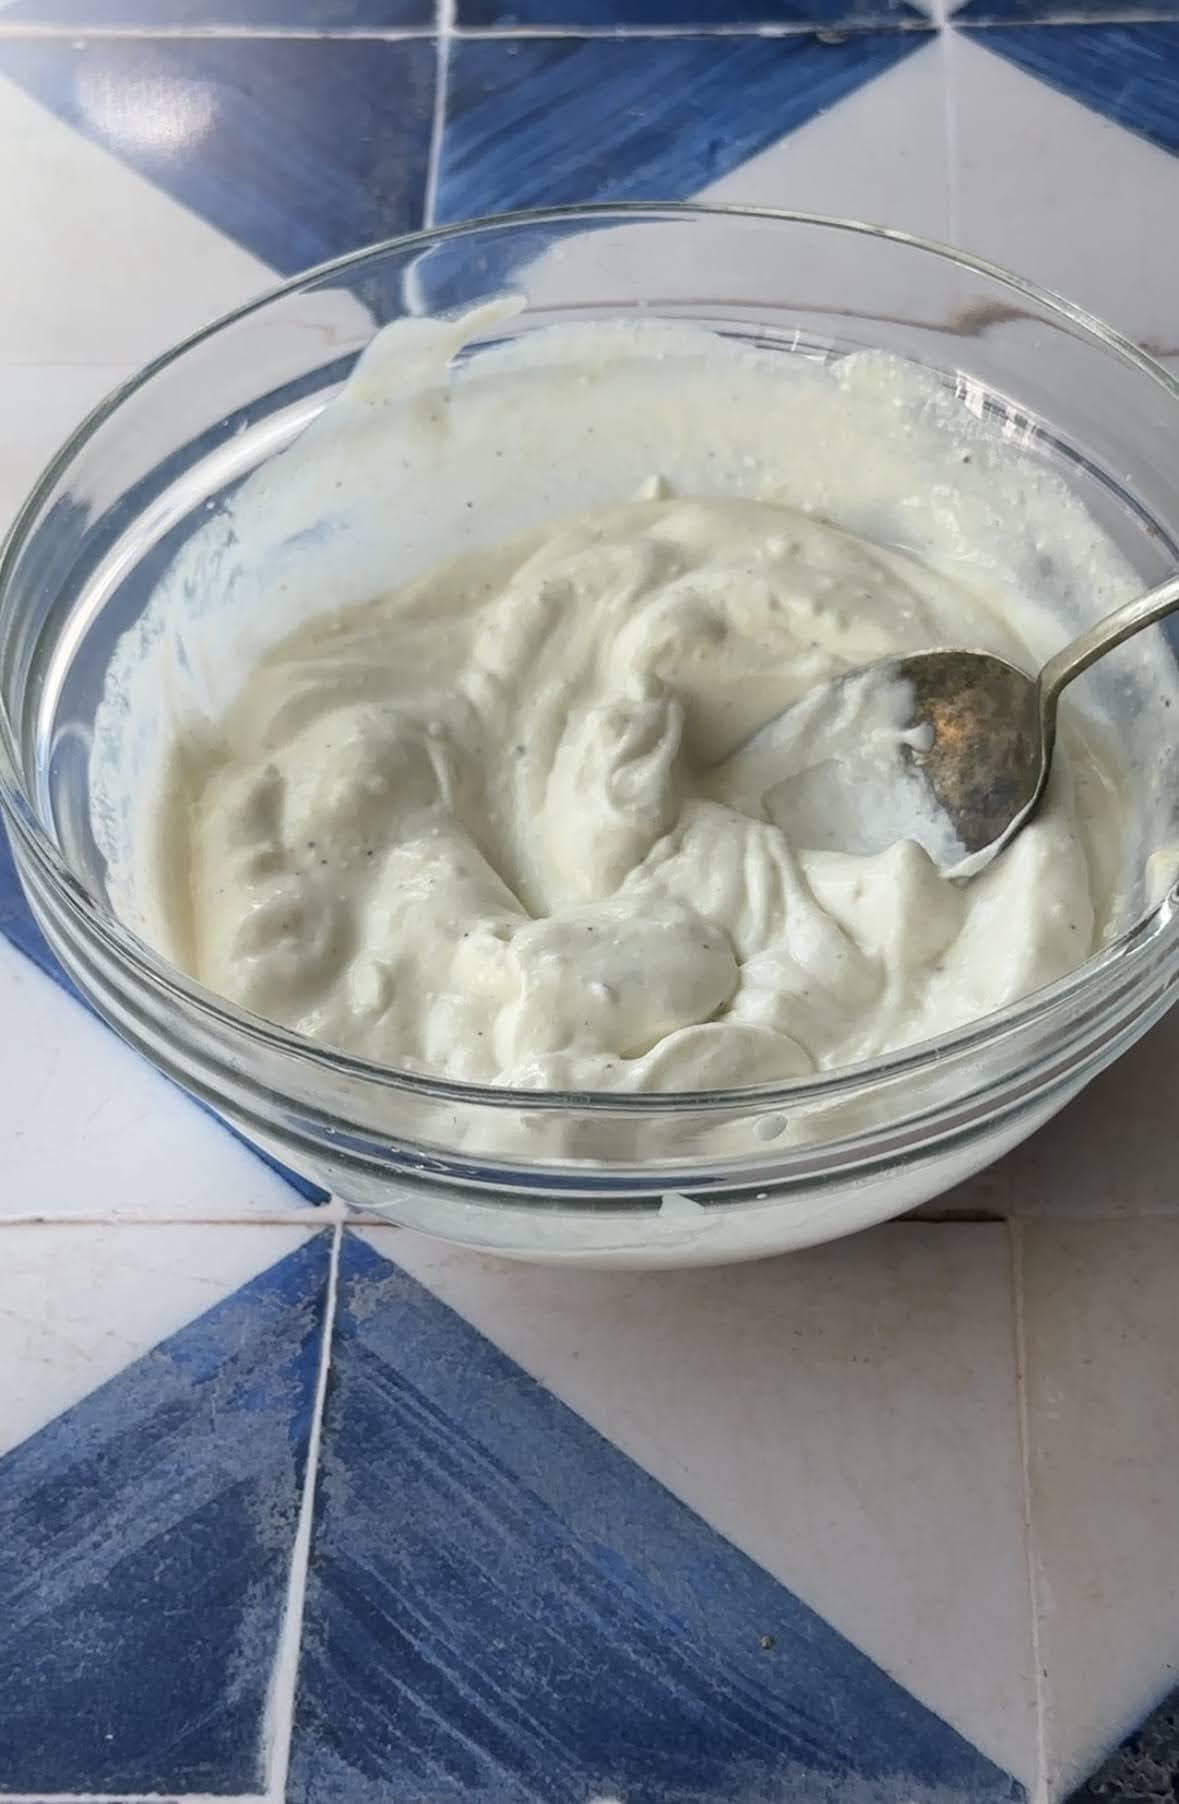 silky fatteh yogurt sauce made up of yogurt, tahini, garlic, and lemon juice